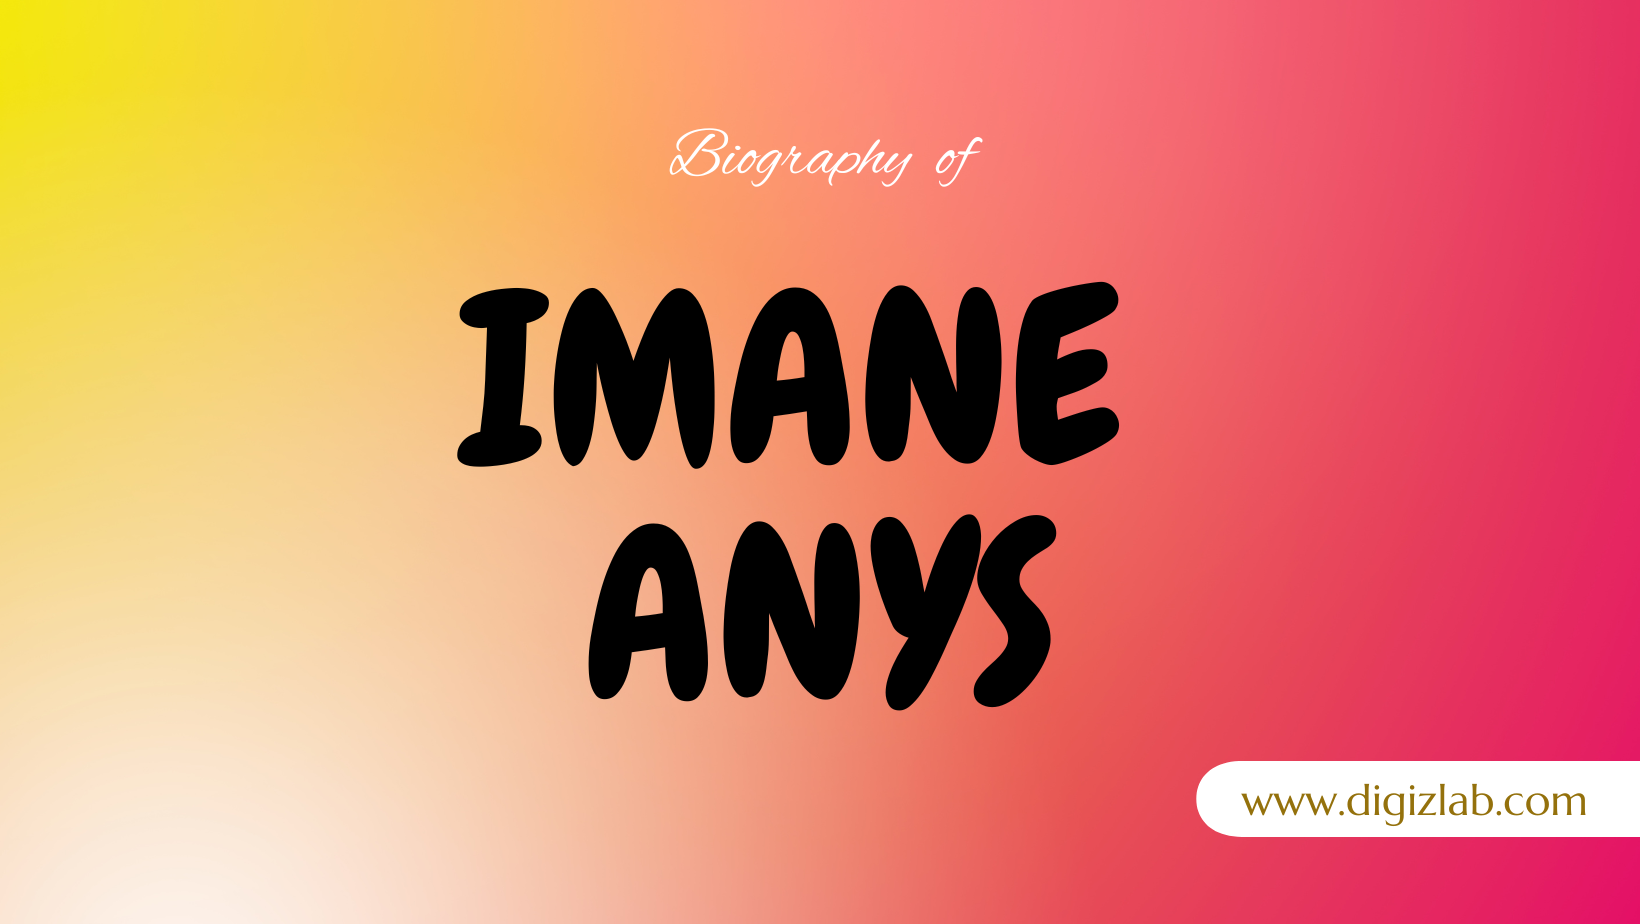 Imane Anys